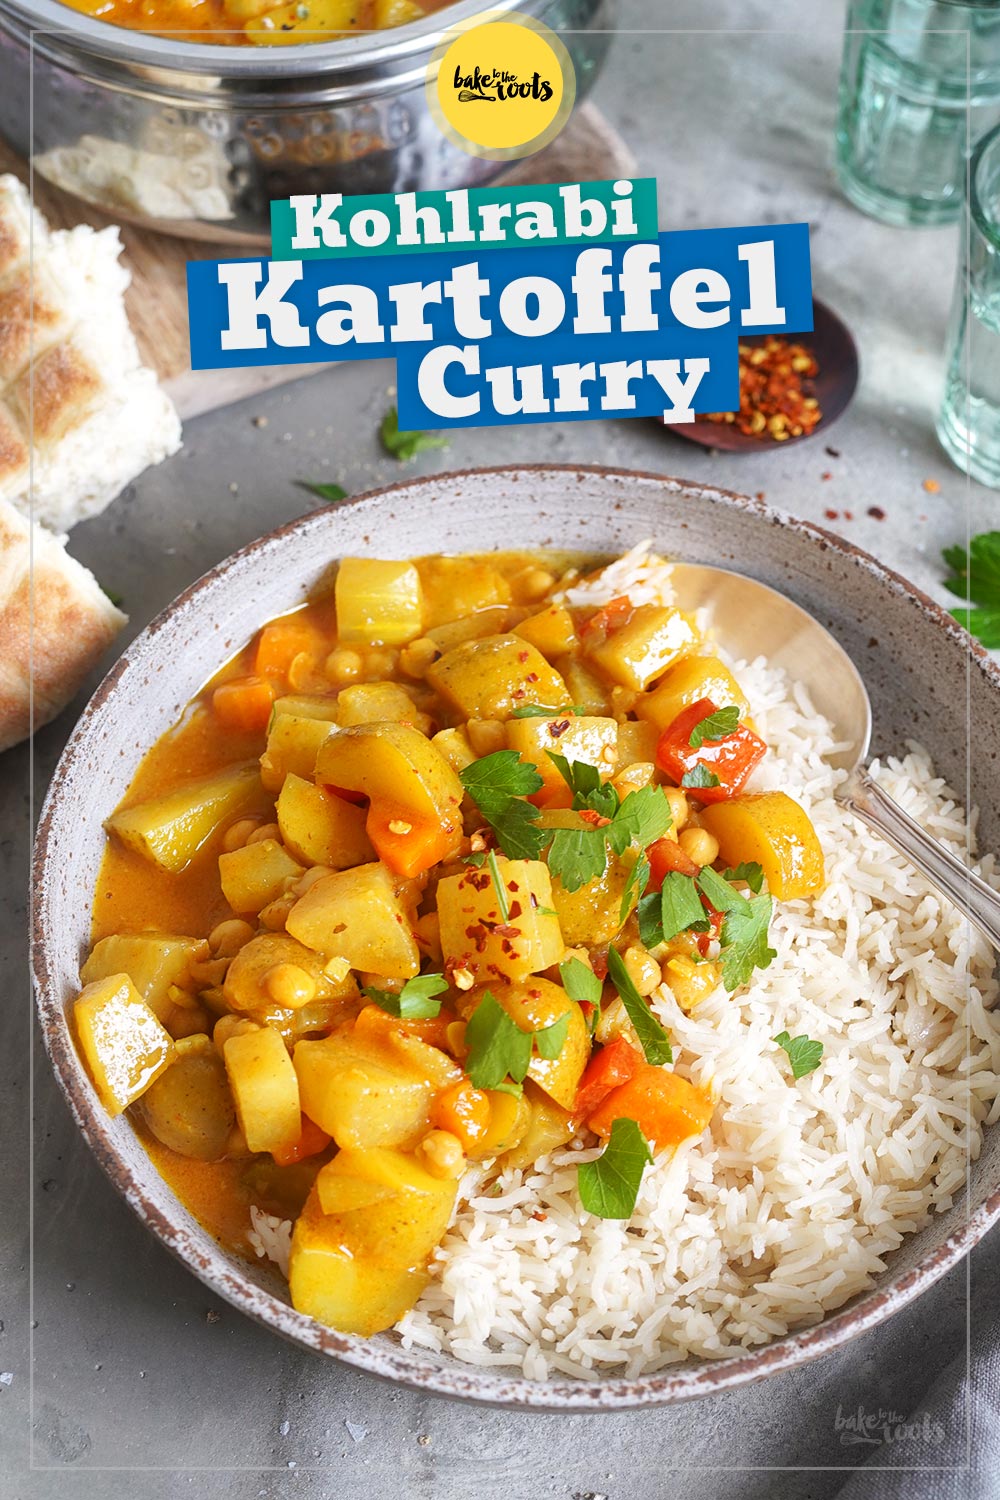 Veganes Kohlrabi & Kartoffel Curry | Bake to the roots